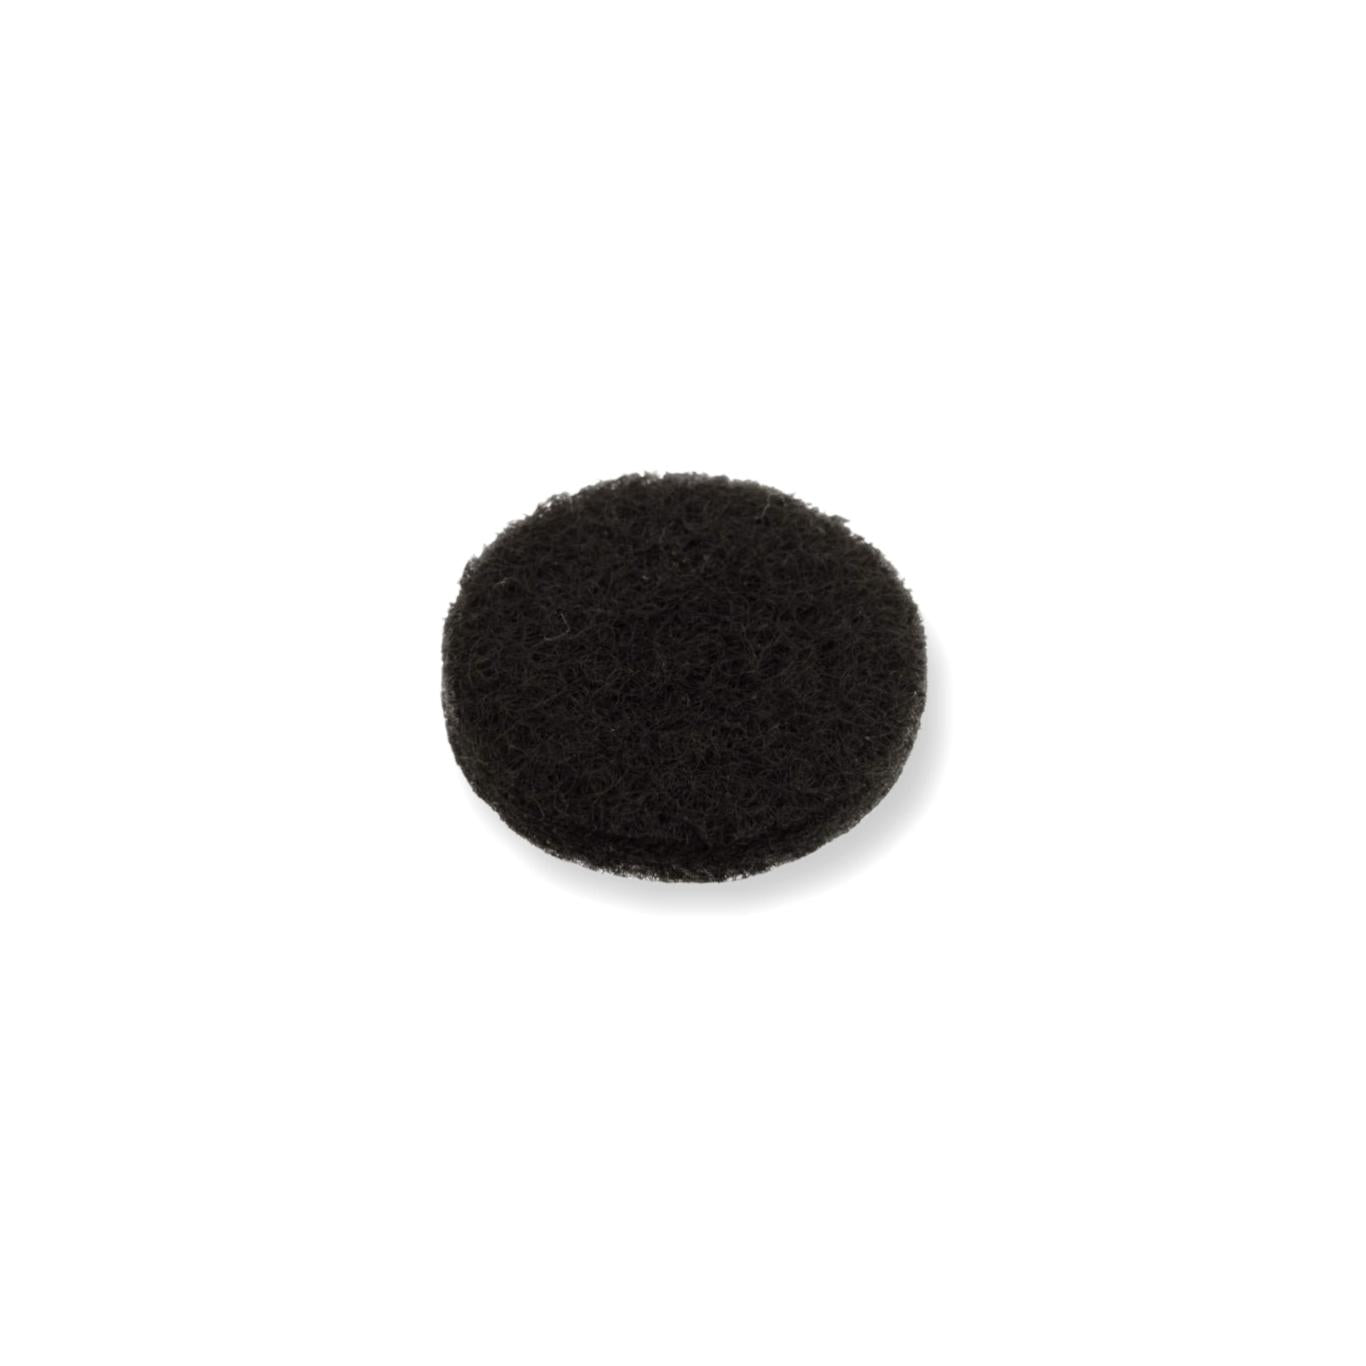 Felt Pads - Dark Brown Self Adhesive Stick on Felt - Round 25mm Diameter - Made in Germany